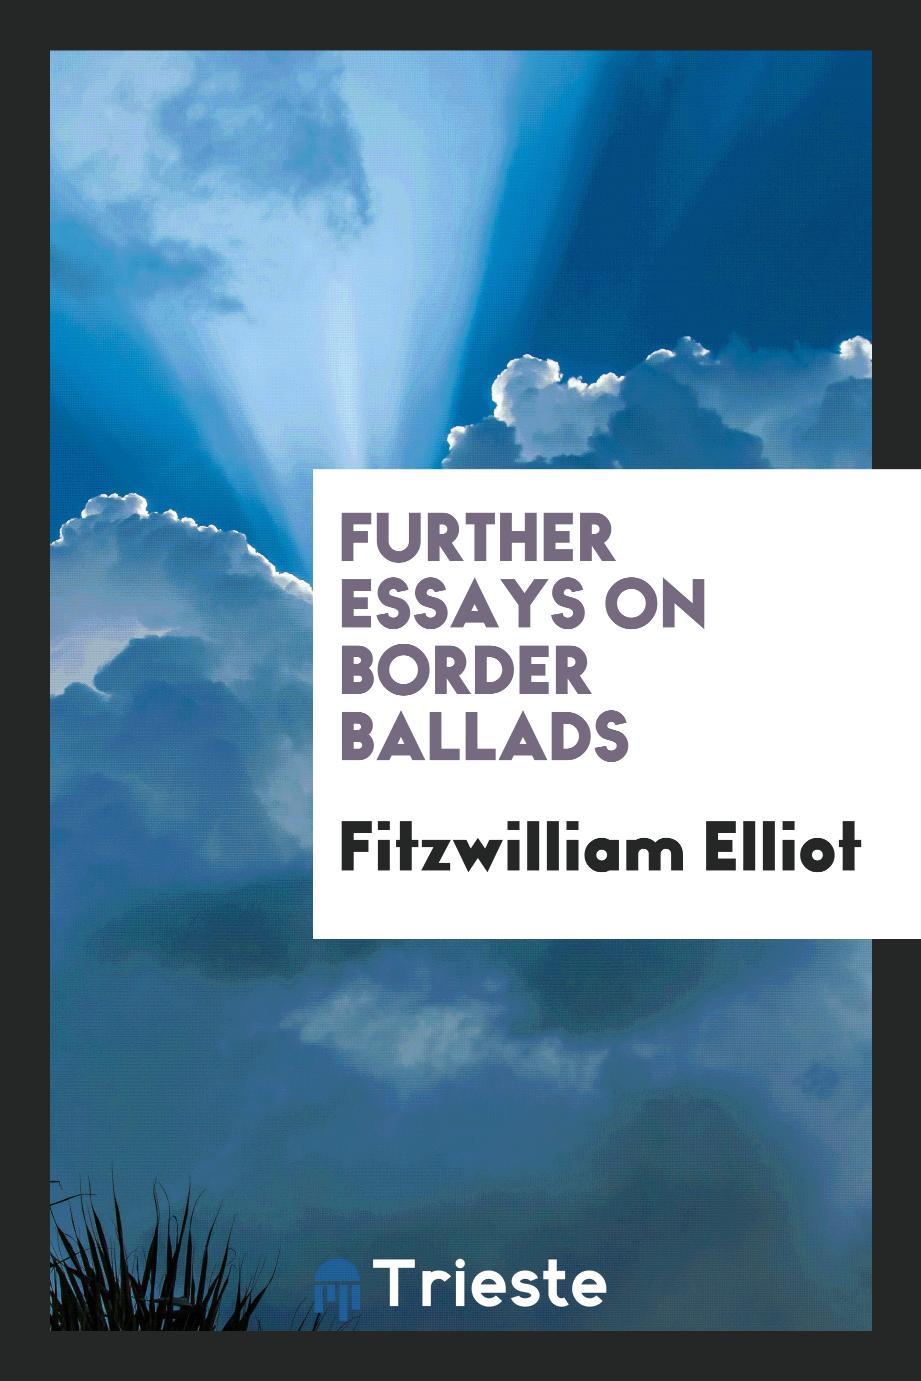 Further essays on border ballads